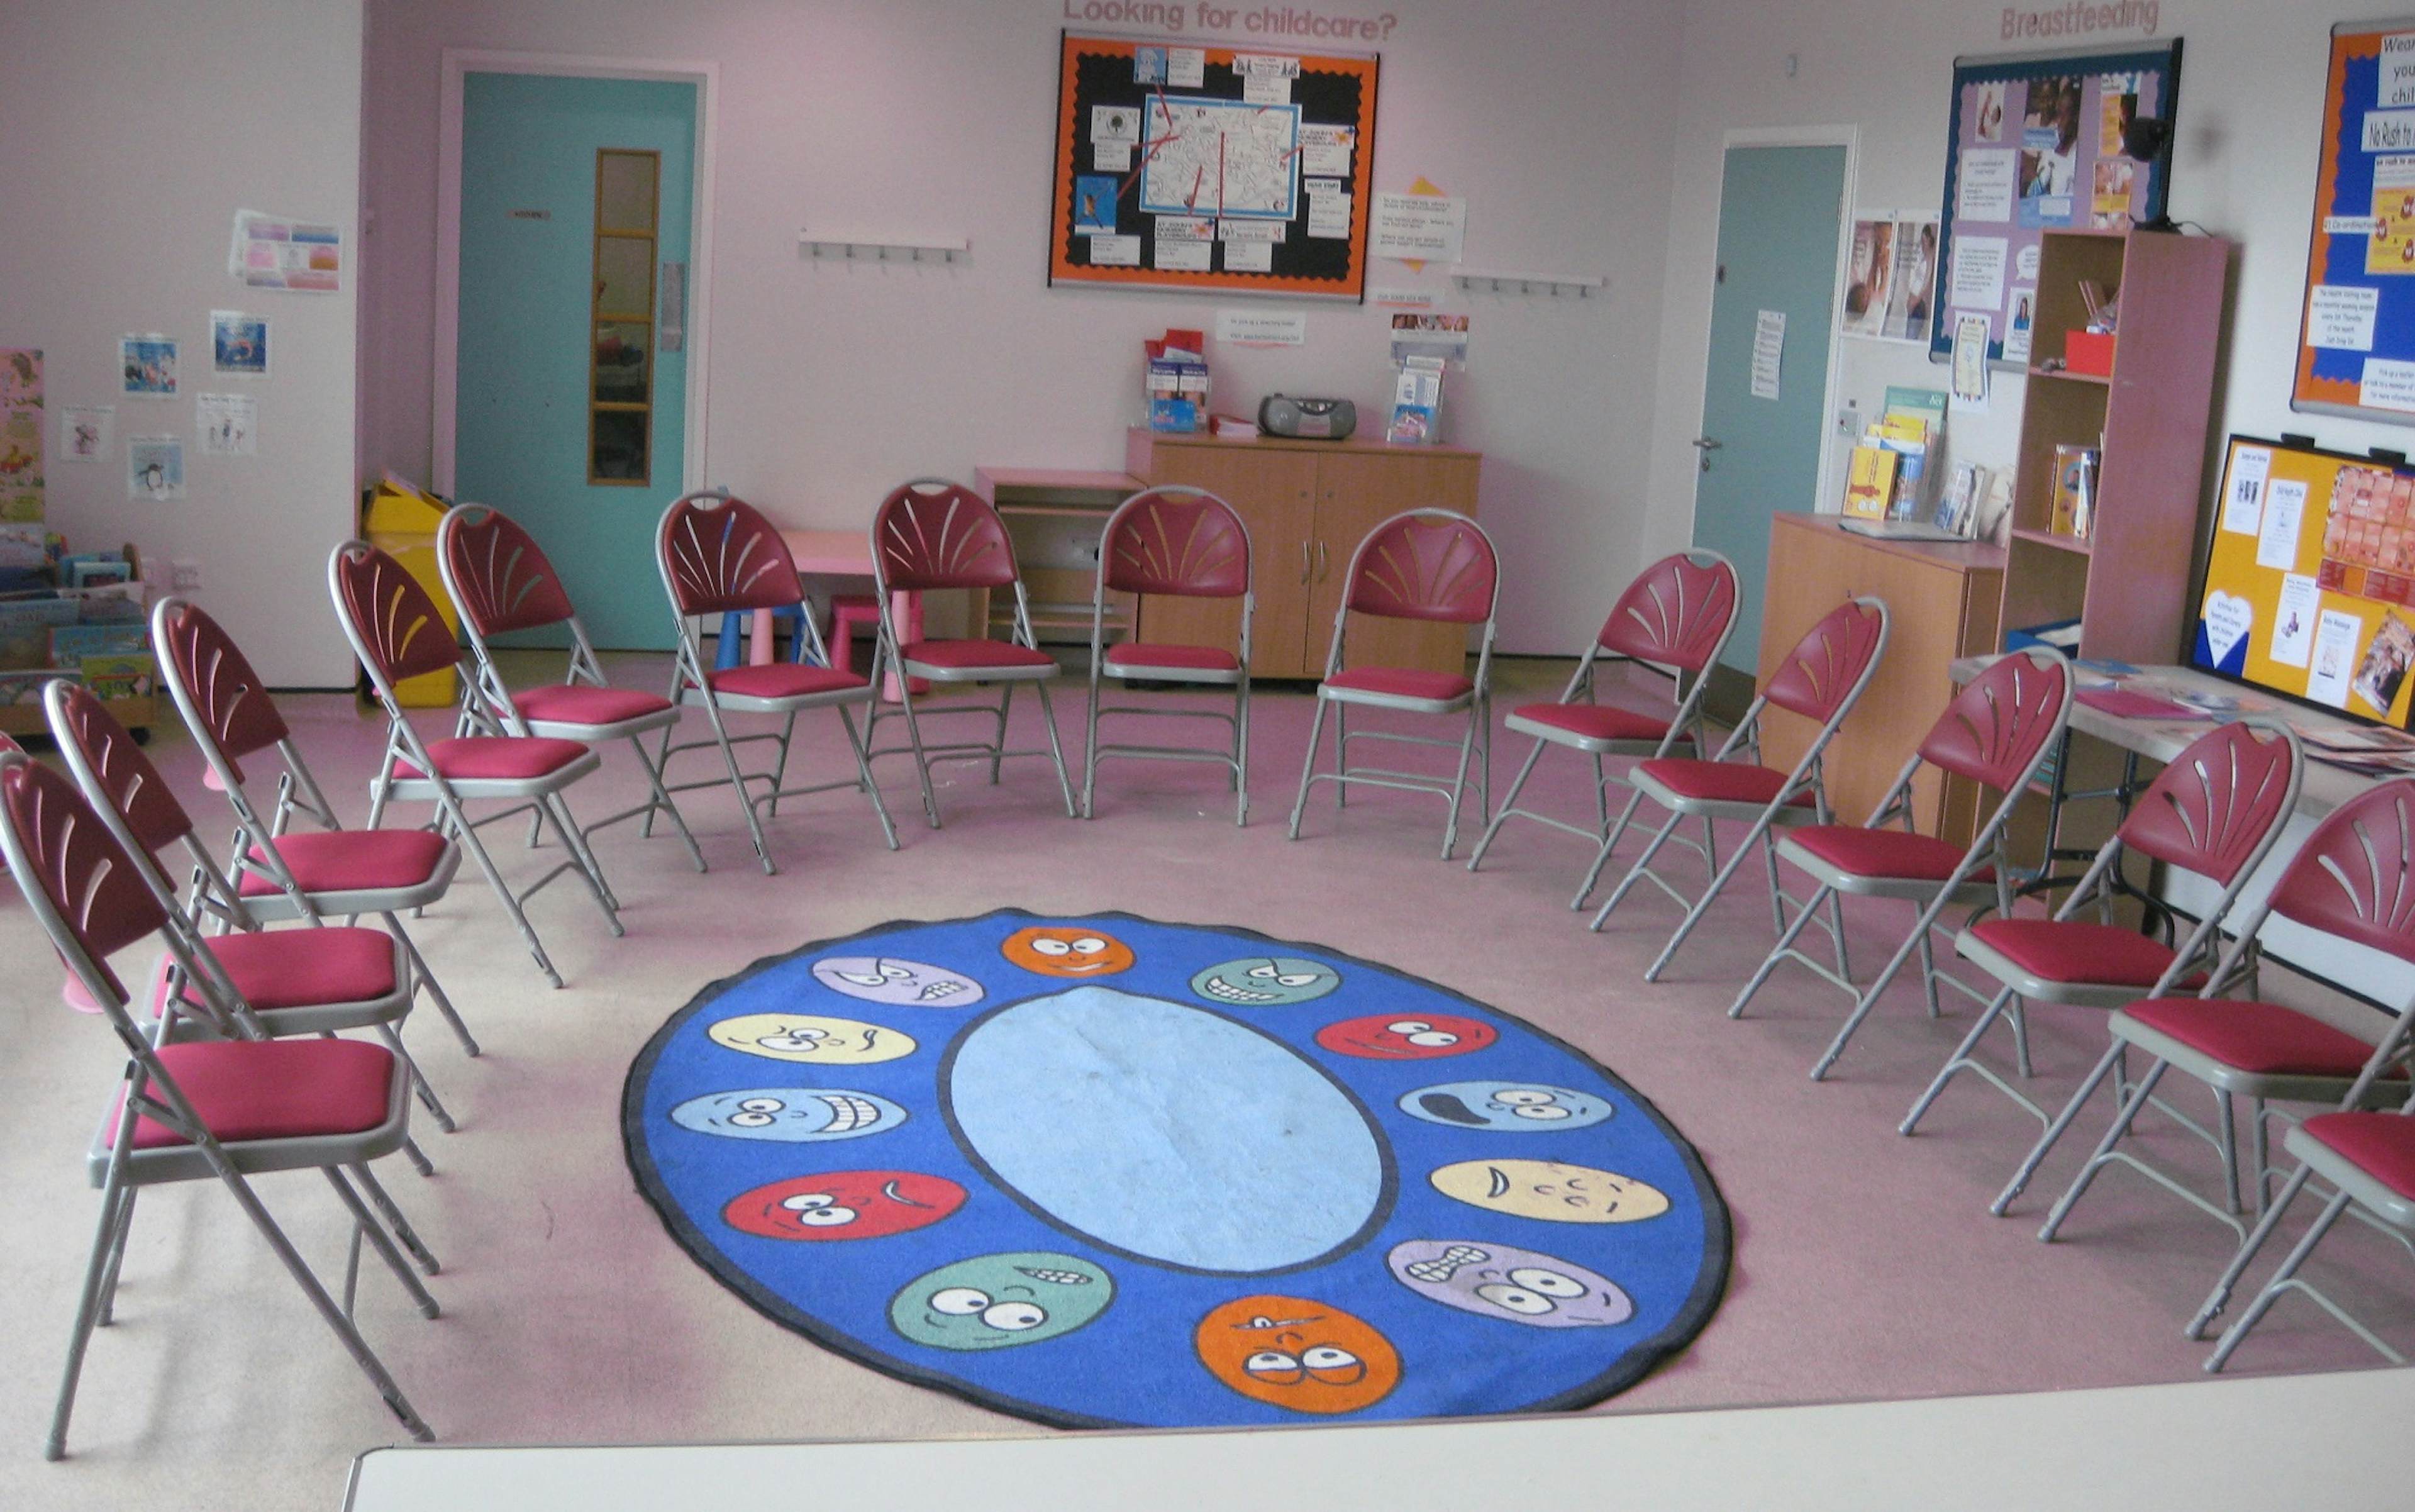 Furzefield Children's Centre - The Community Room image 1